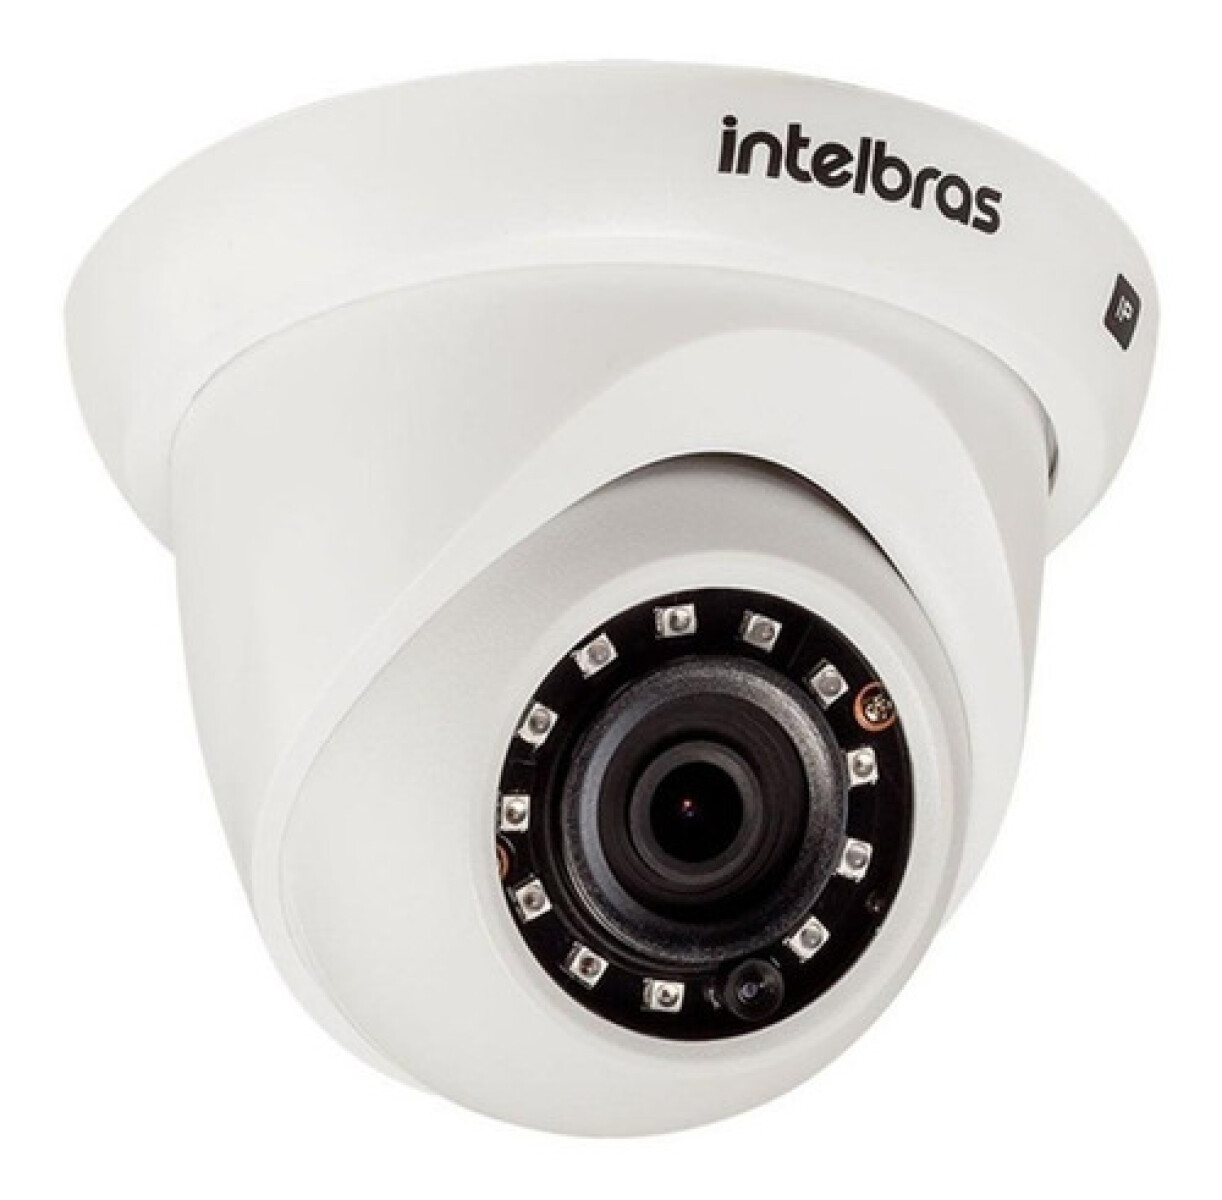 Seg. CCTV | Domo 1080p - VHD 3220 D G6 2,8mm IR20 INTELBRAS - Seg. Cctv | Domo 1080p - Vhd 3220 D G6 2,8mm Ir20 Intelbras 